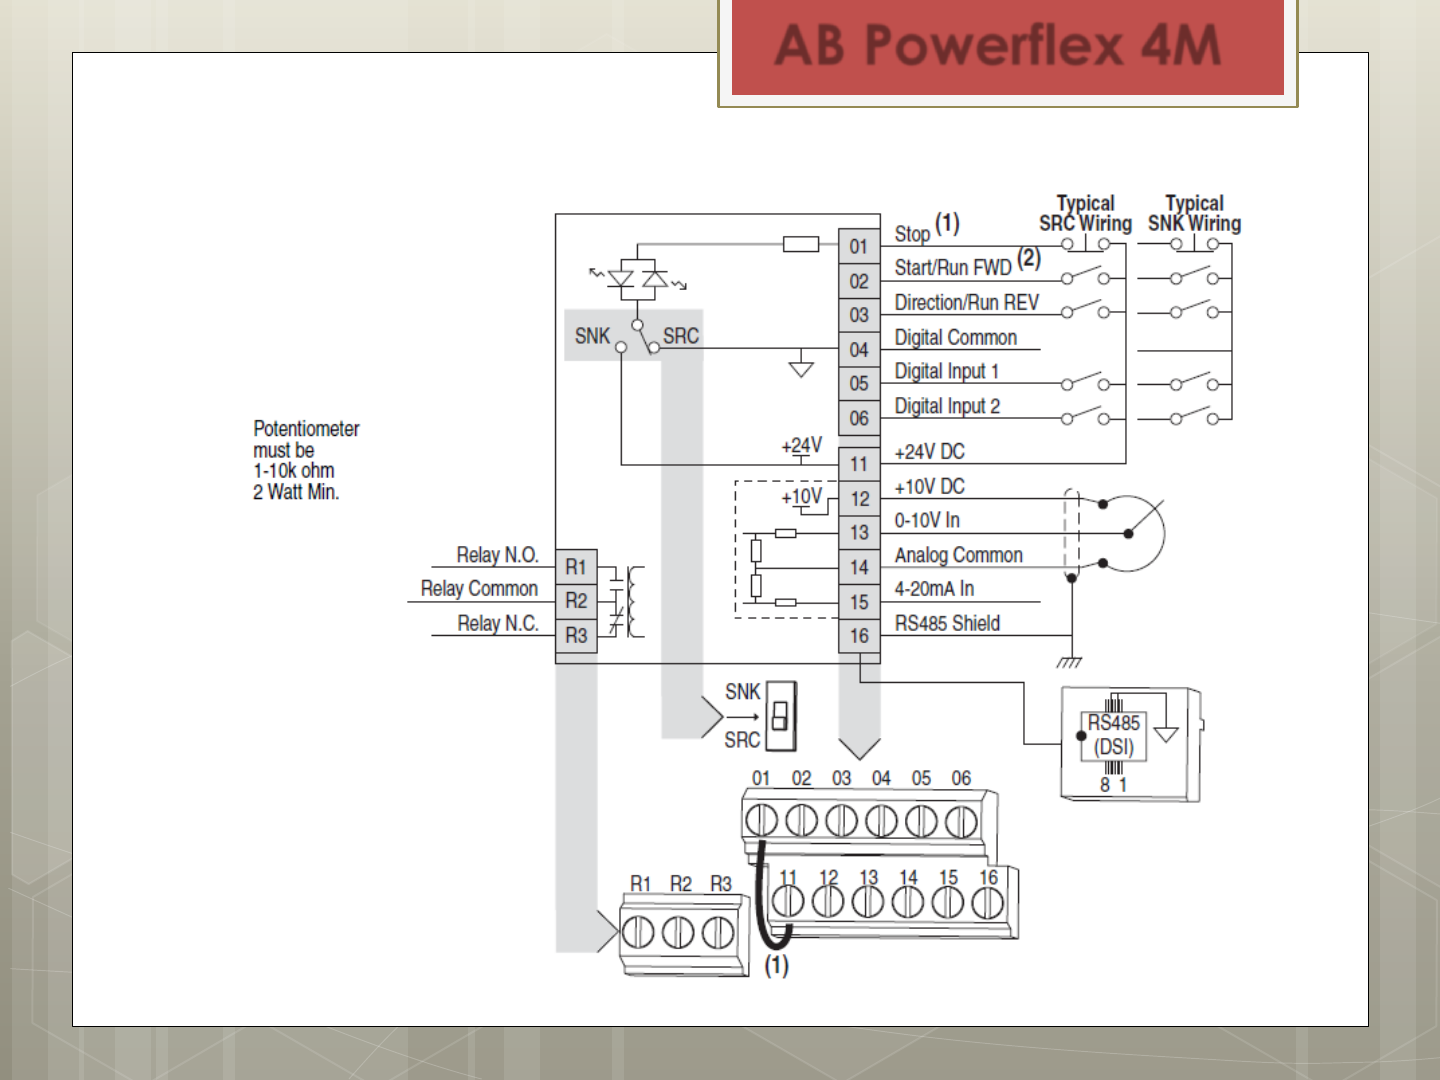 Powerflex 4m parameter manual pdf compressor